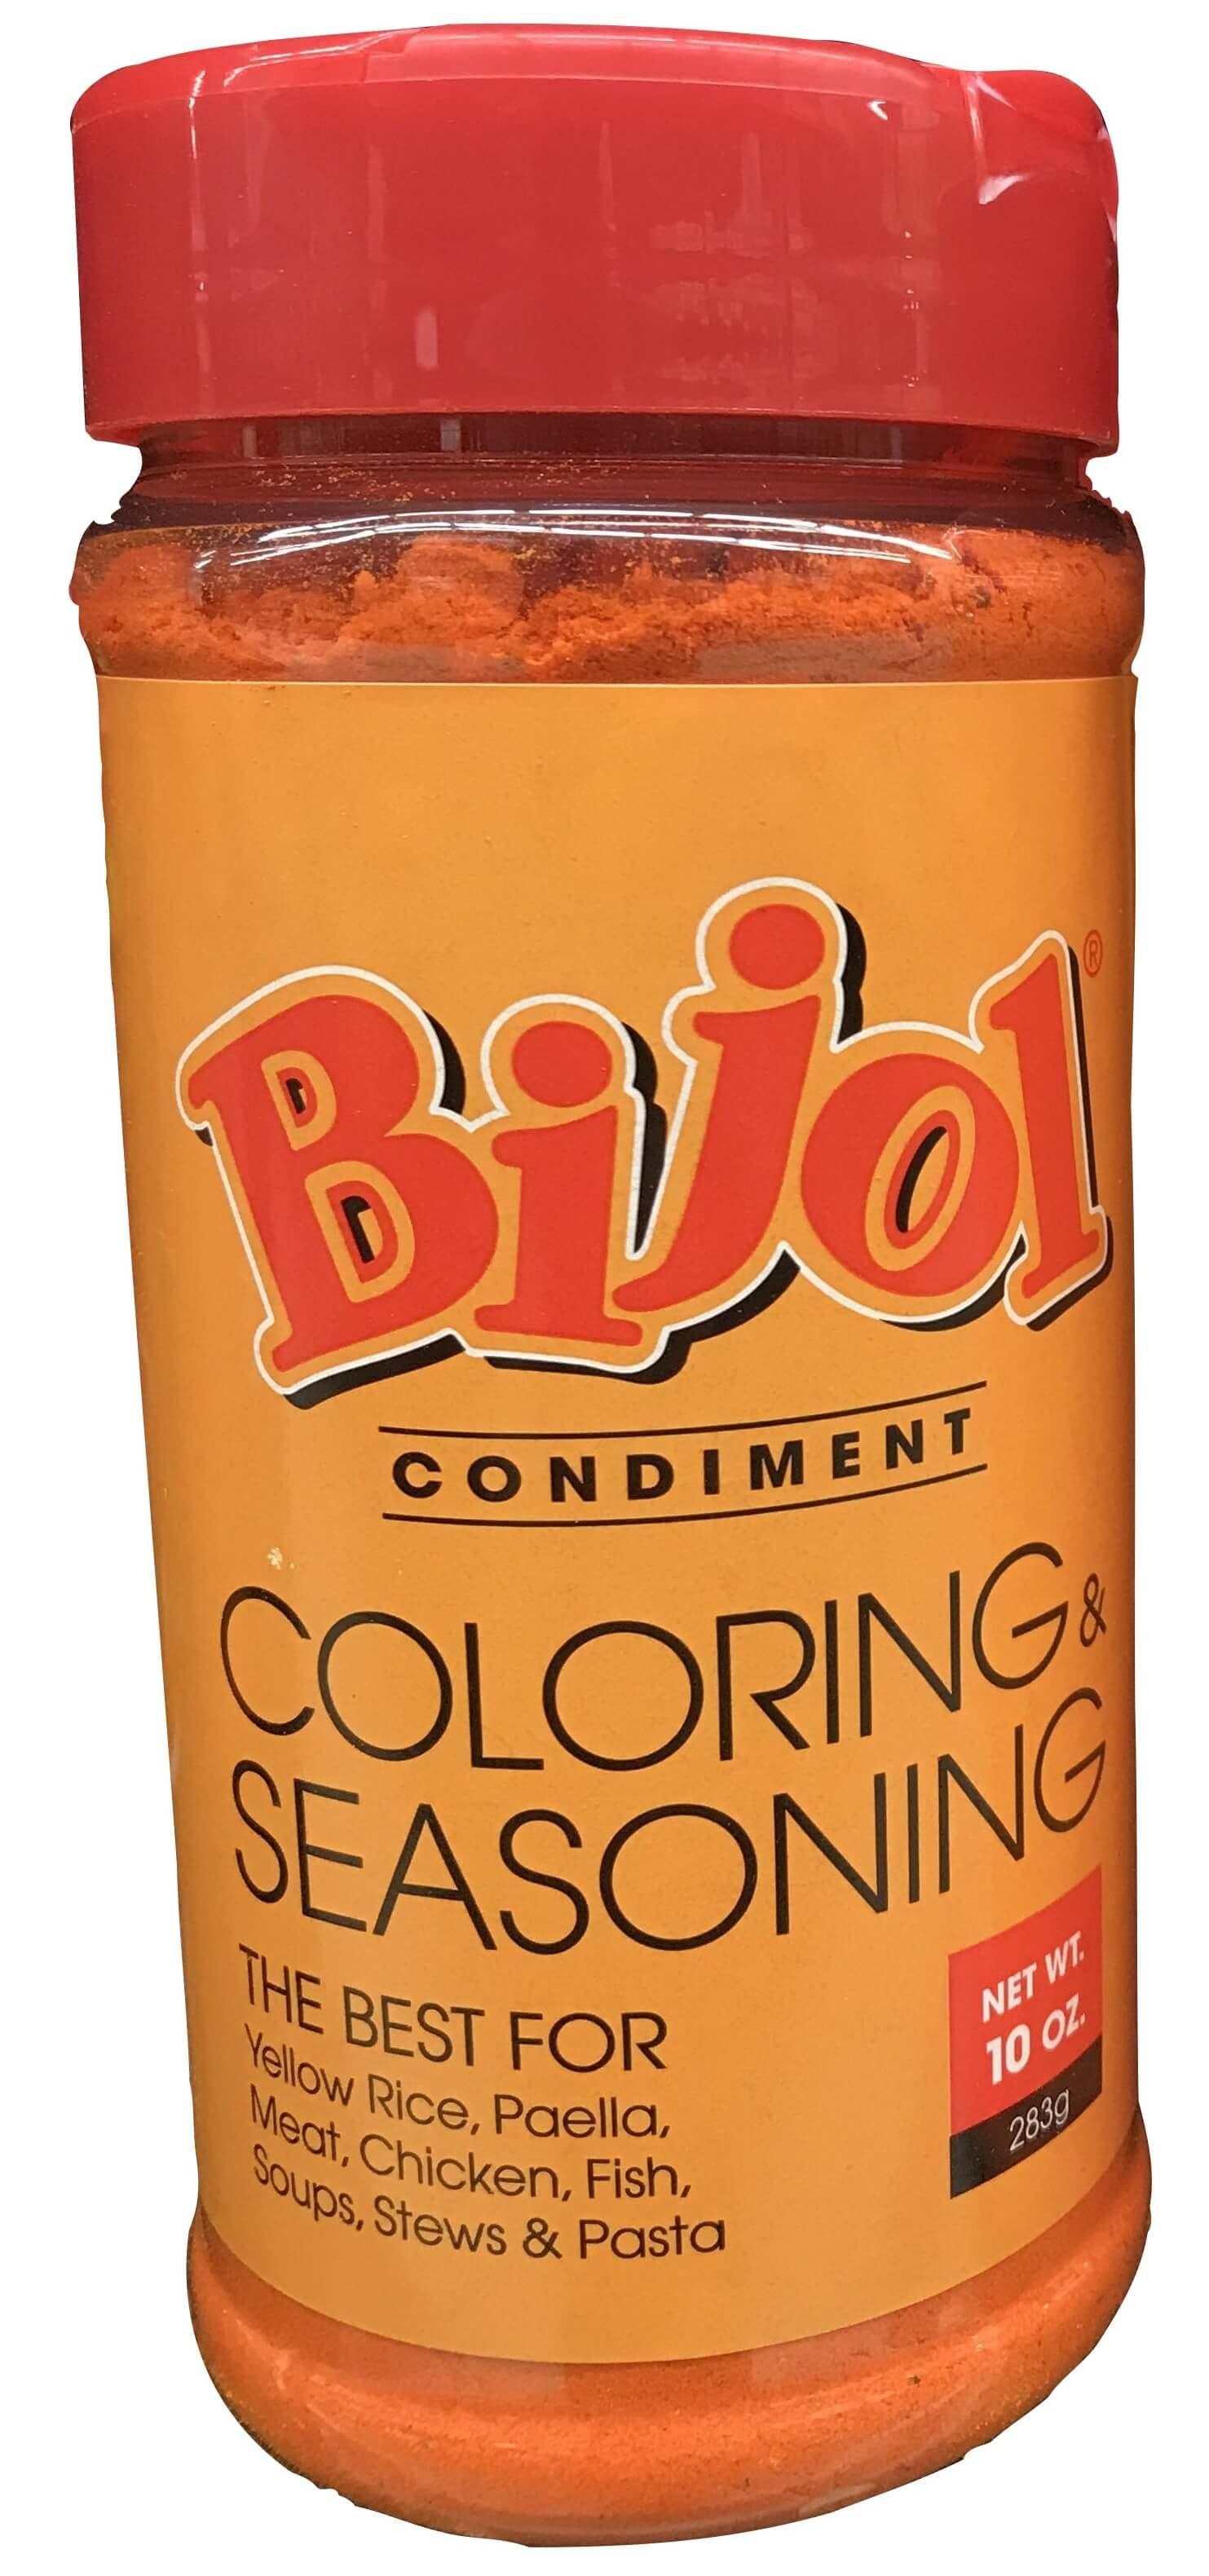 Bijol - Condiment Coloring & Seasoning 10 oz